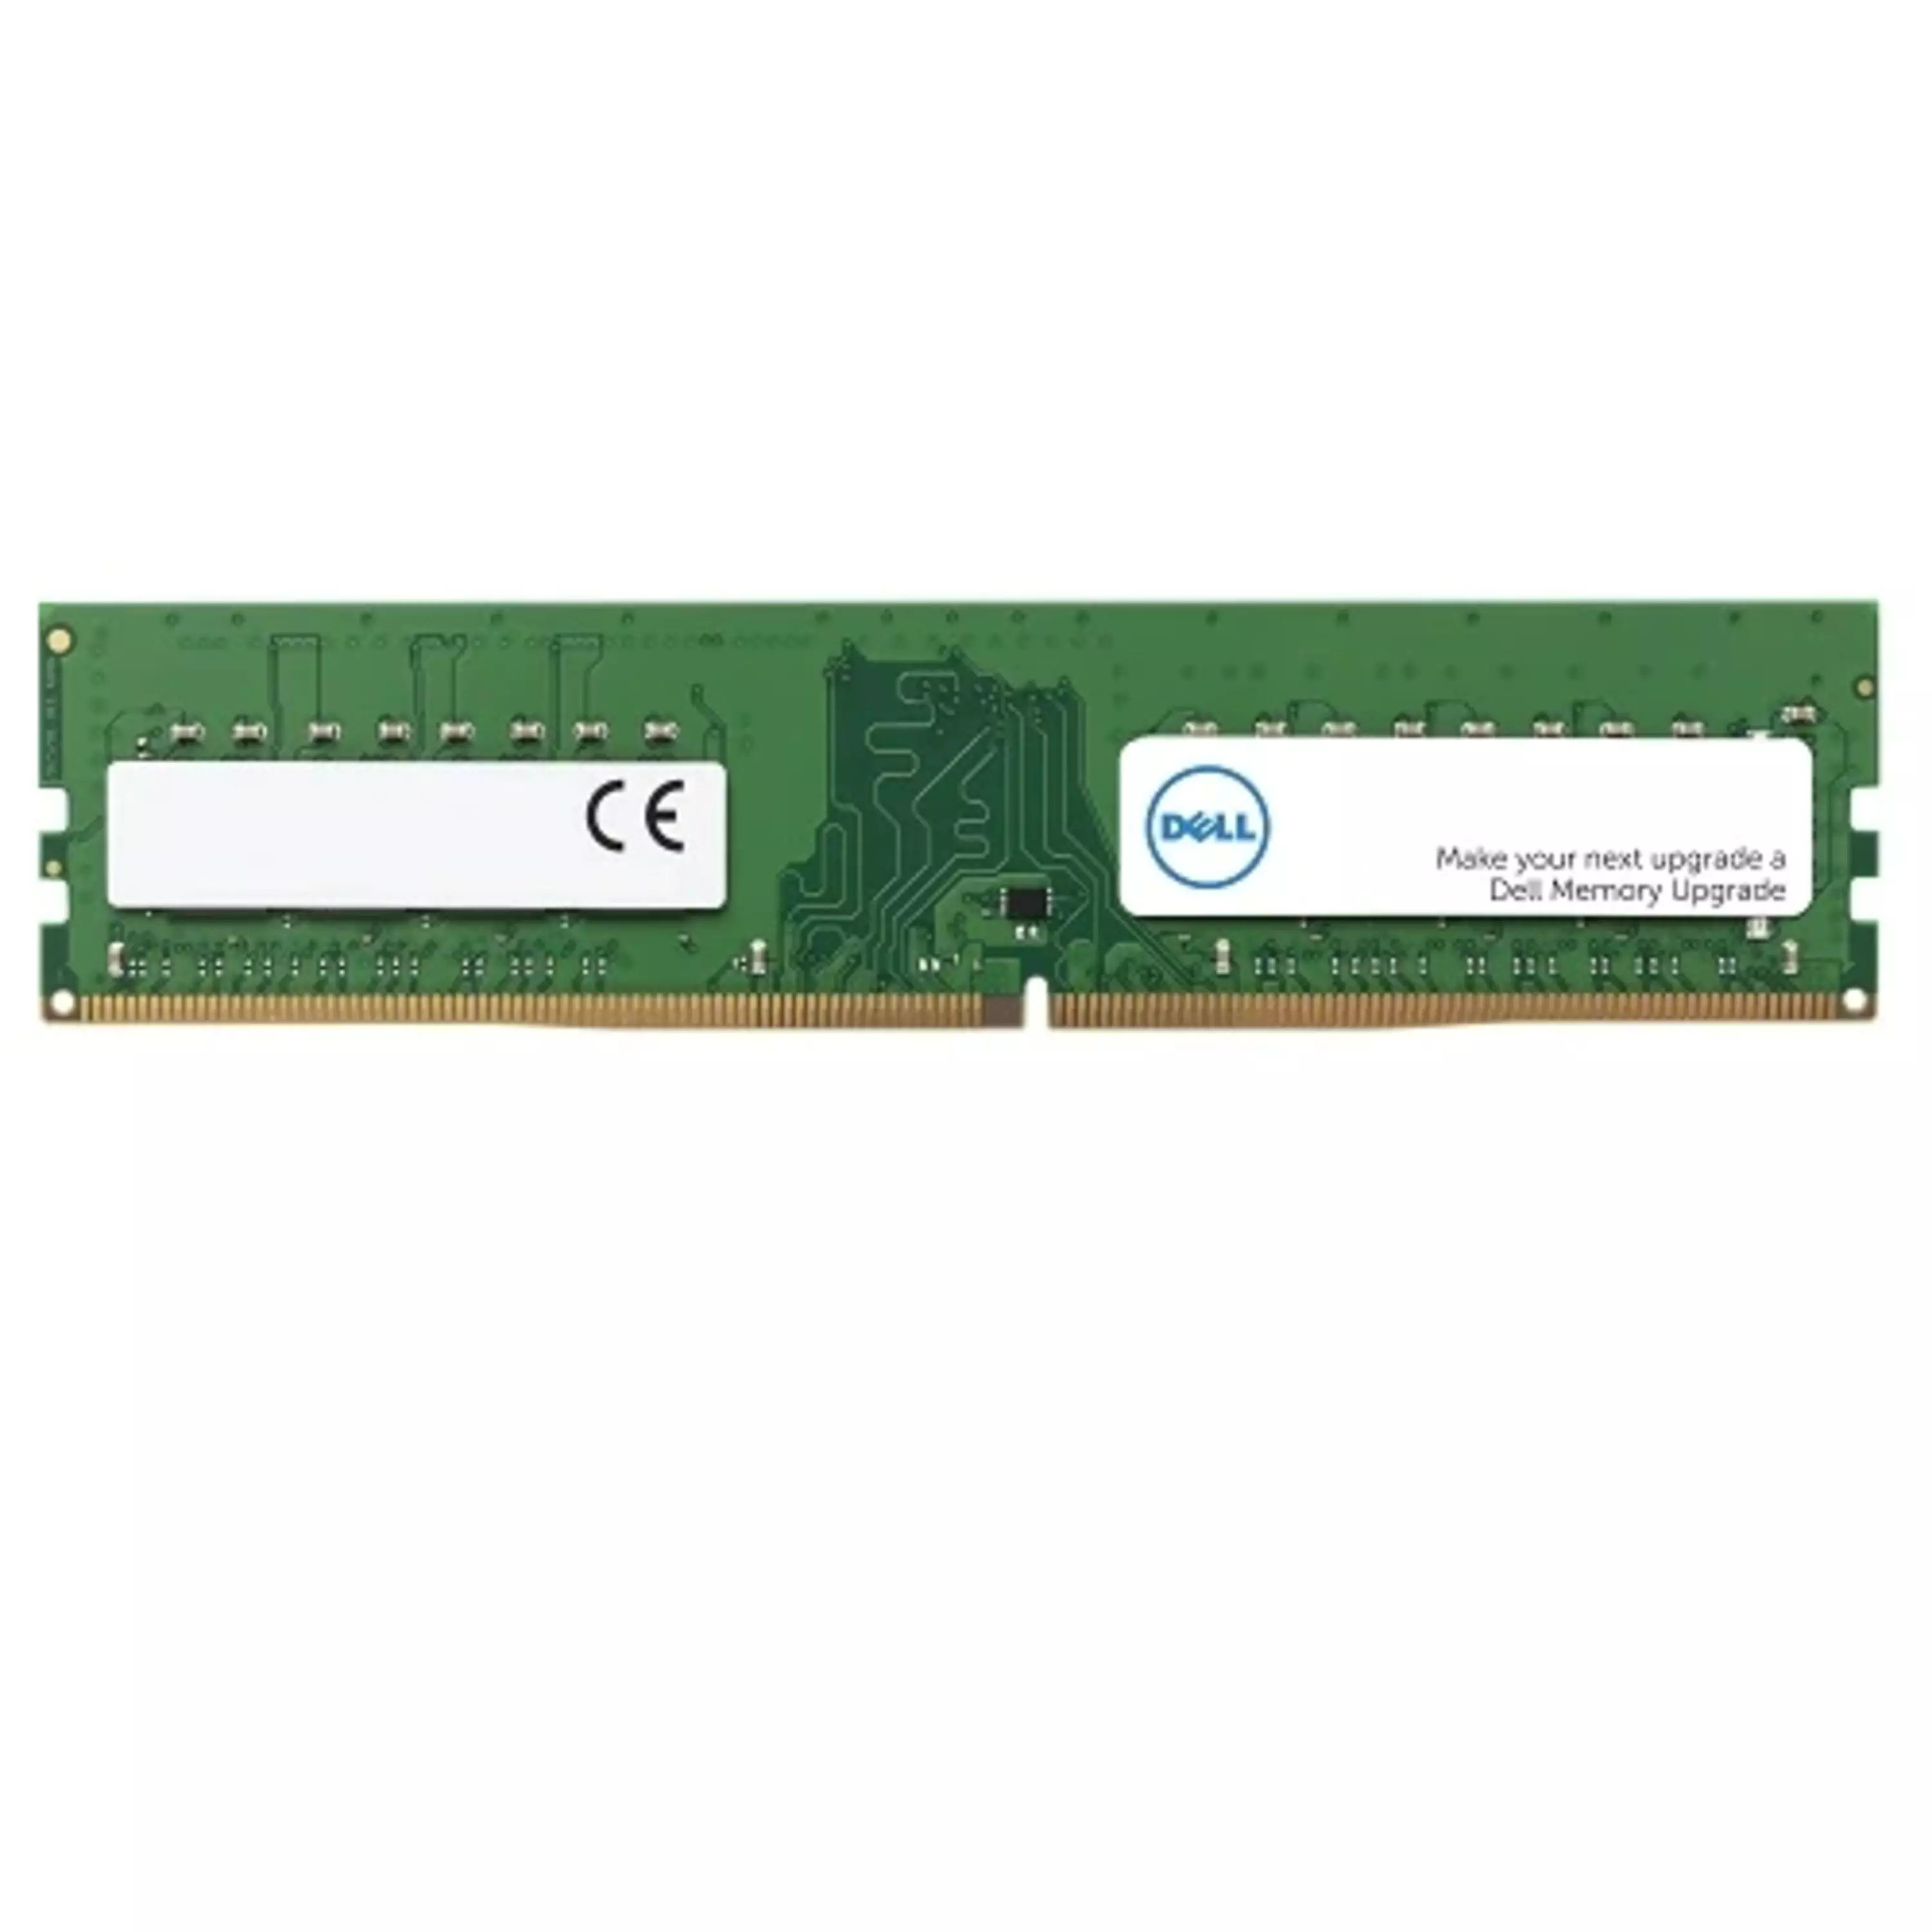 Held og lykke pianist elektropositive Dell Memory Upgrade - 4 GB - 1Rx16 DDR4 UDIMM 2400 MHz | Dell USA